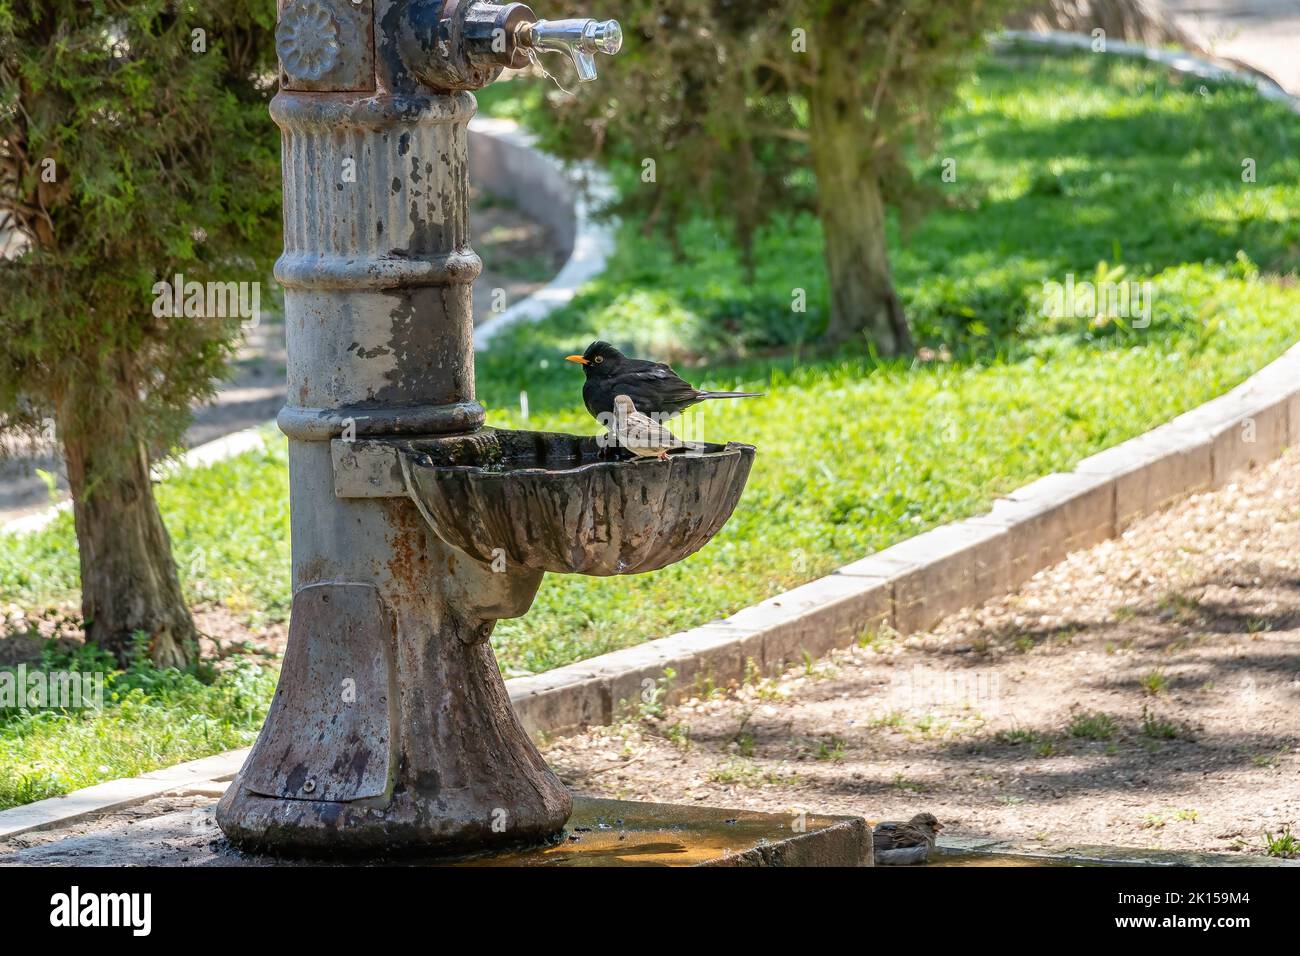 Merlo maschio (Turdus merula) bagno e bere in una fontana pubblica Foto Stock